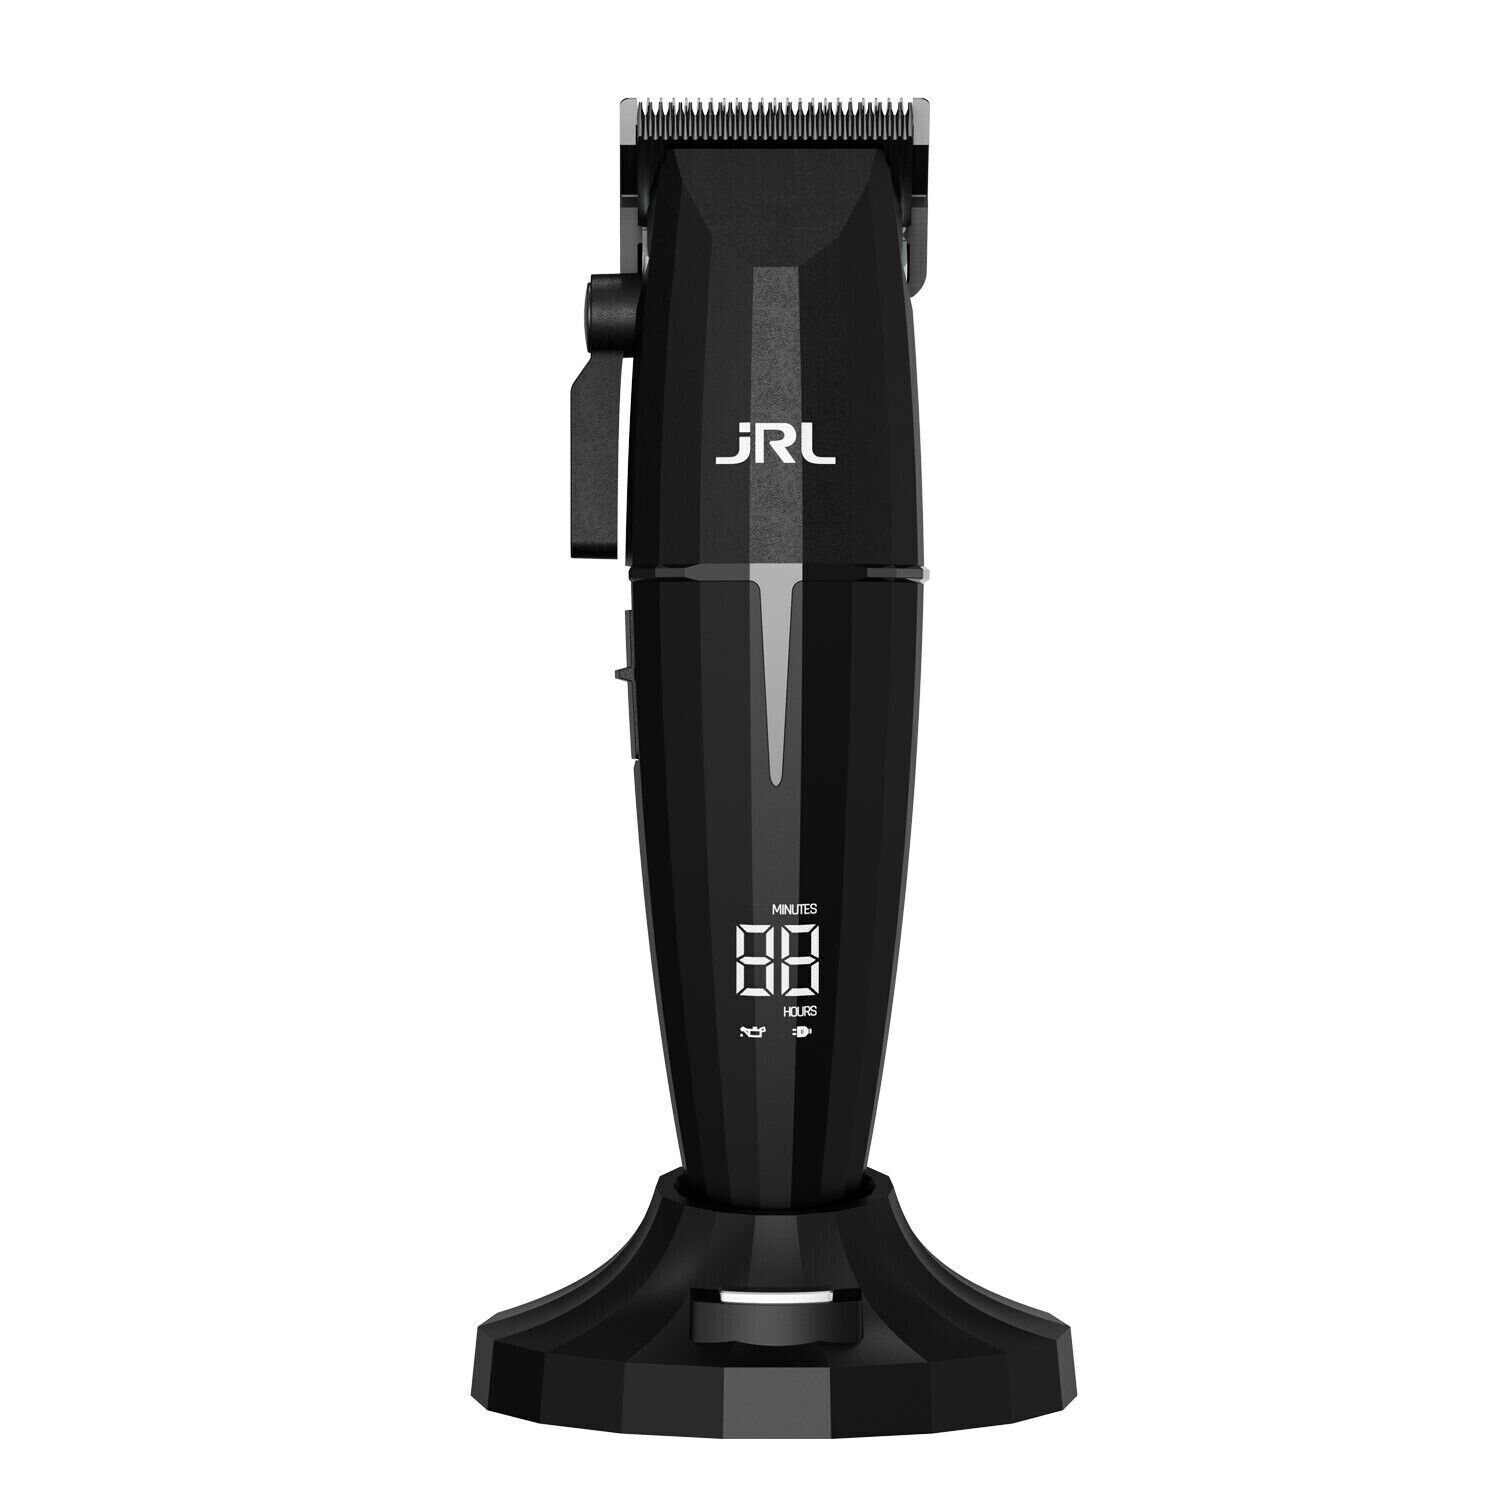 JRL ONYX Professional Cordless Black Hair Clipper | FF2020C-B - BRAND NEW